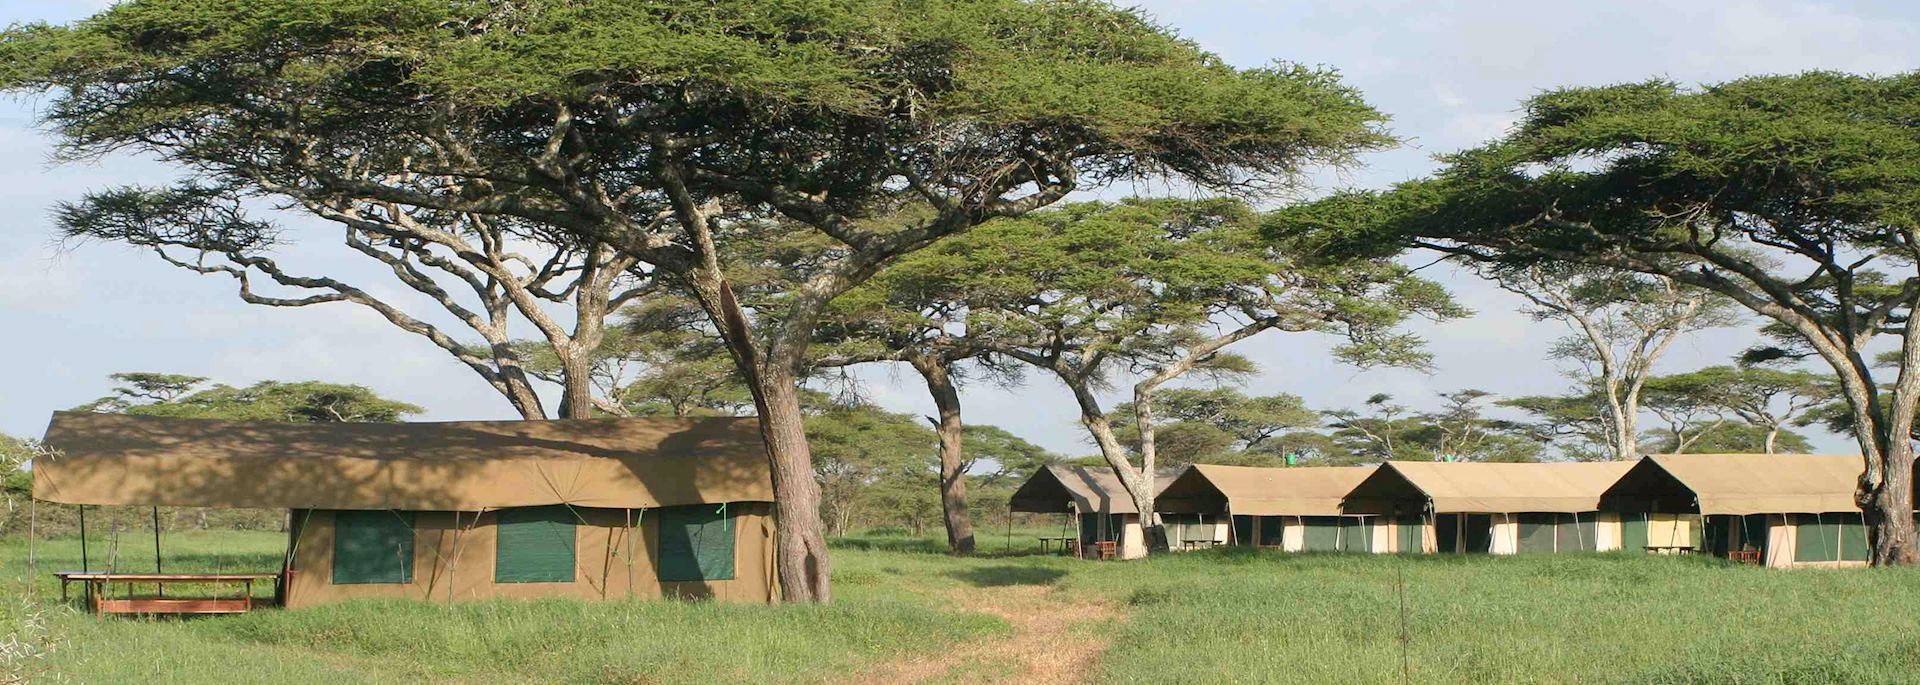 Serengeti Kati Kati Camp